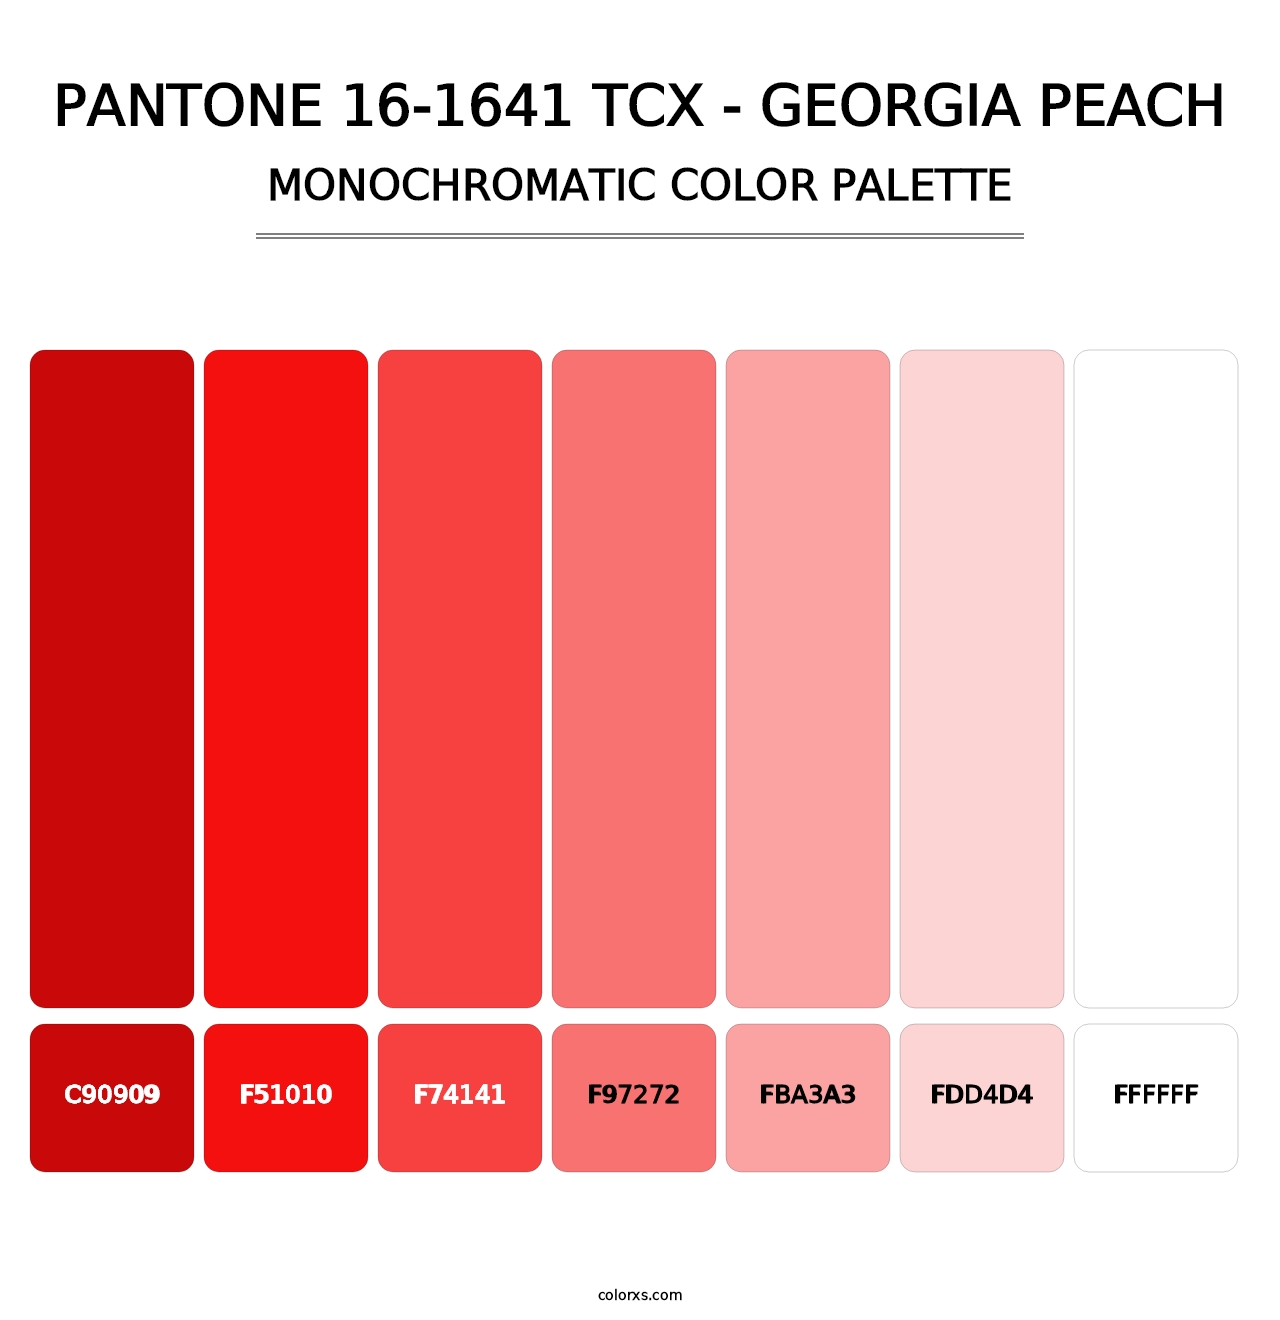 PANTONE 16-1641 TCX - Georgia Peach - Monochromatic Color Palette